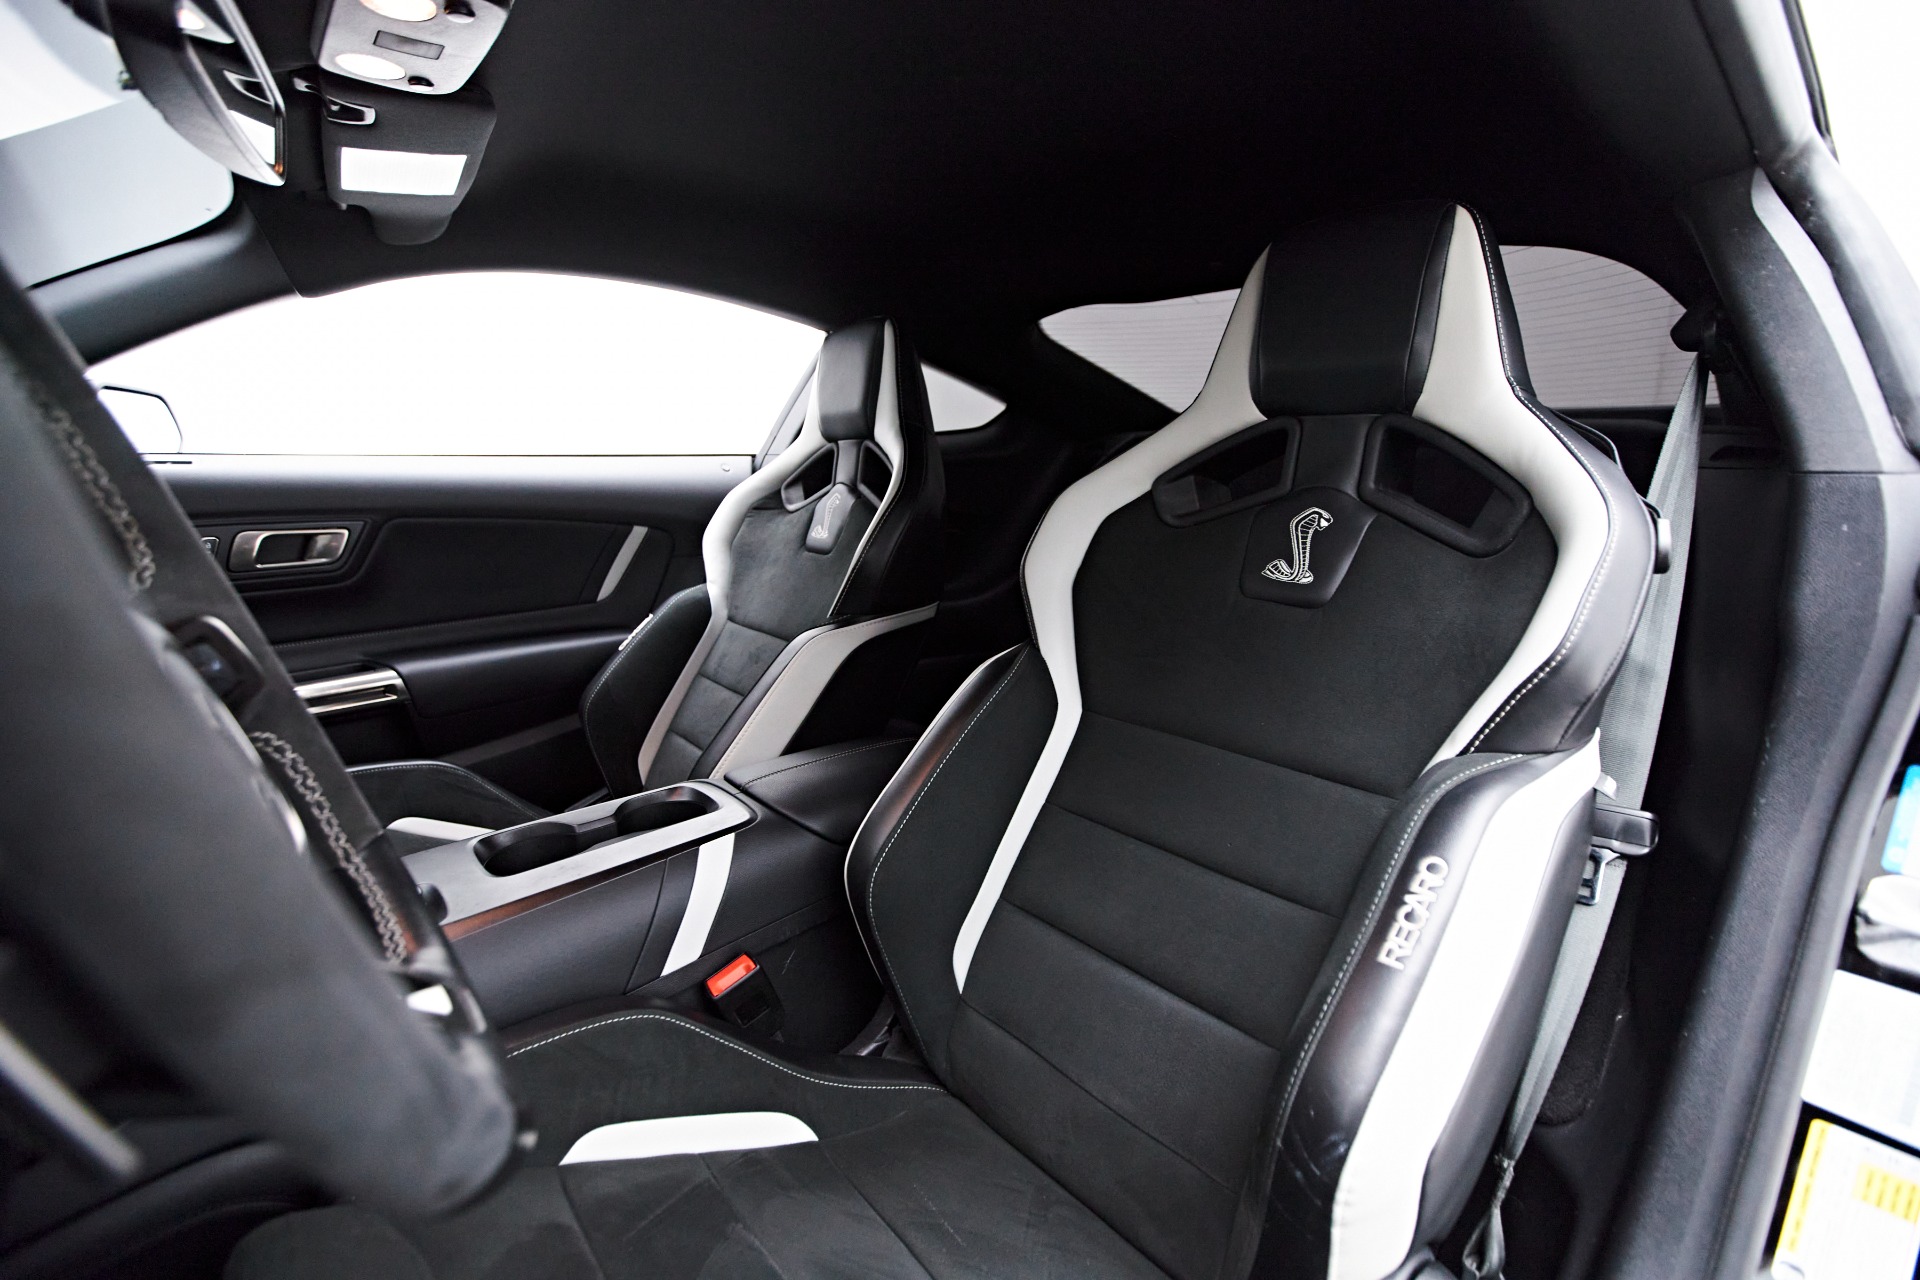 Ford Mustang interior - Seats